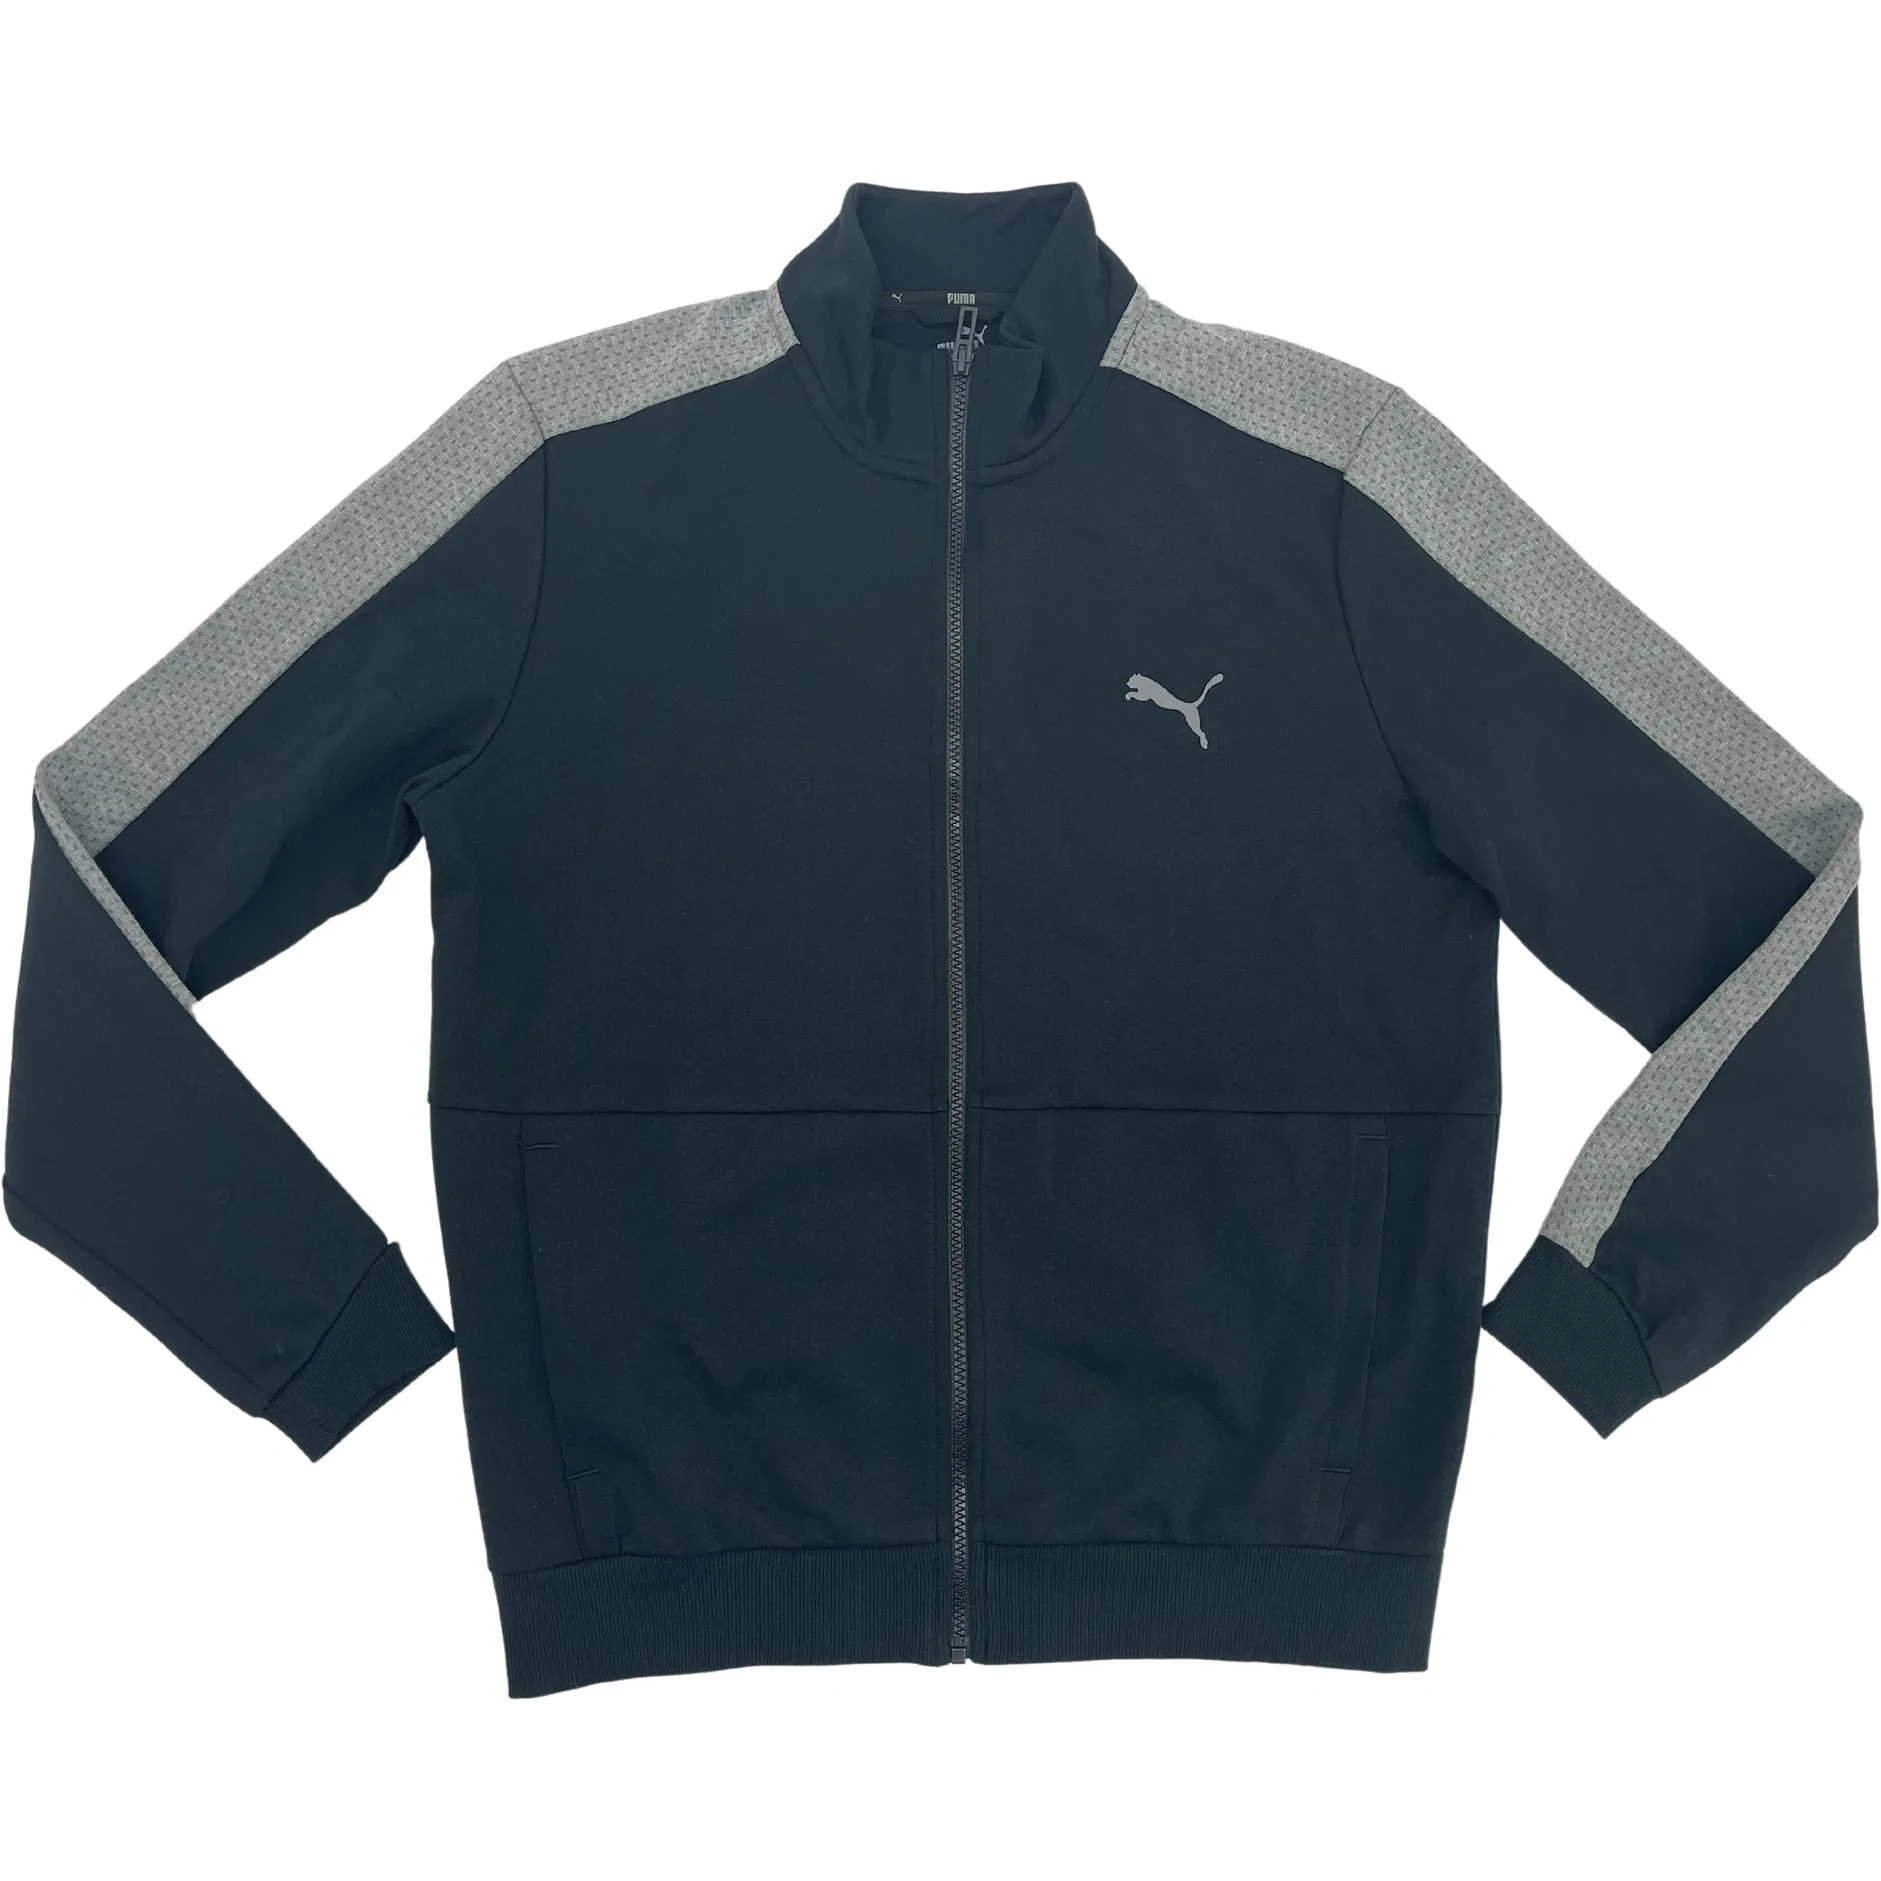 Puma Men's Zip Up Sweater / Black & Grey / Size Medium